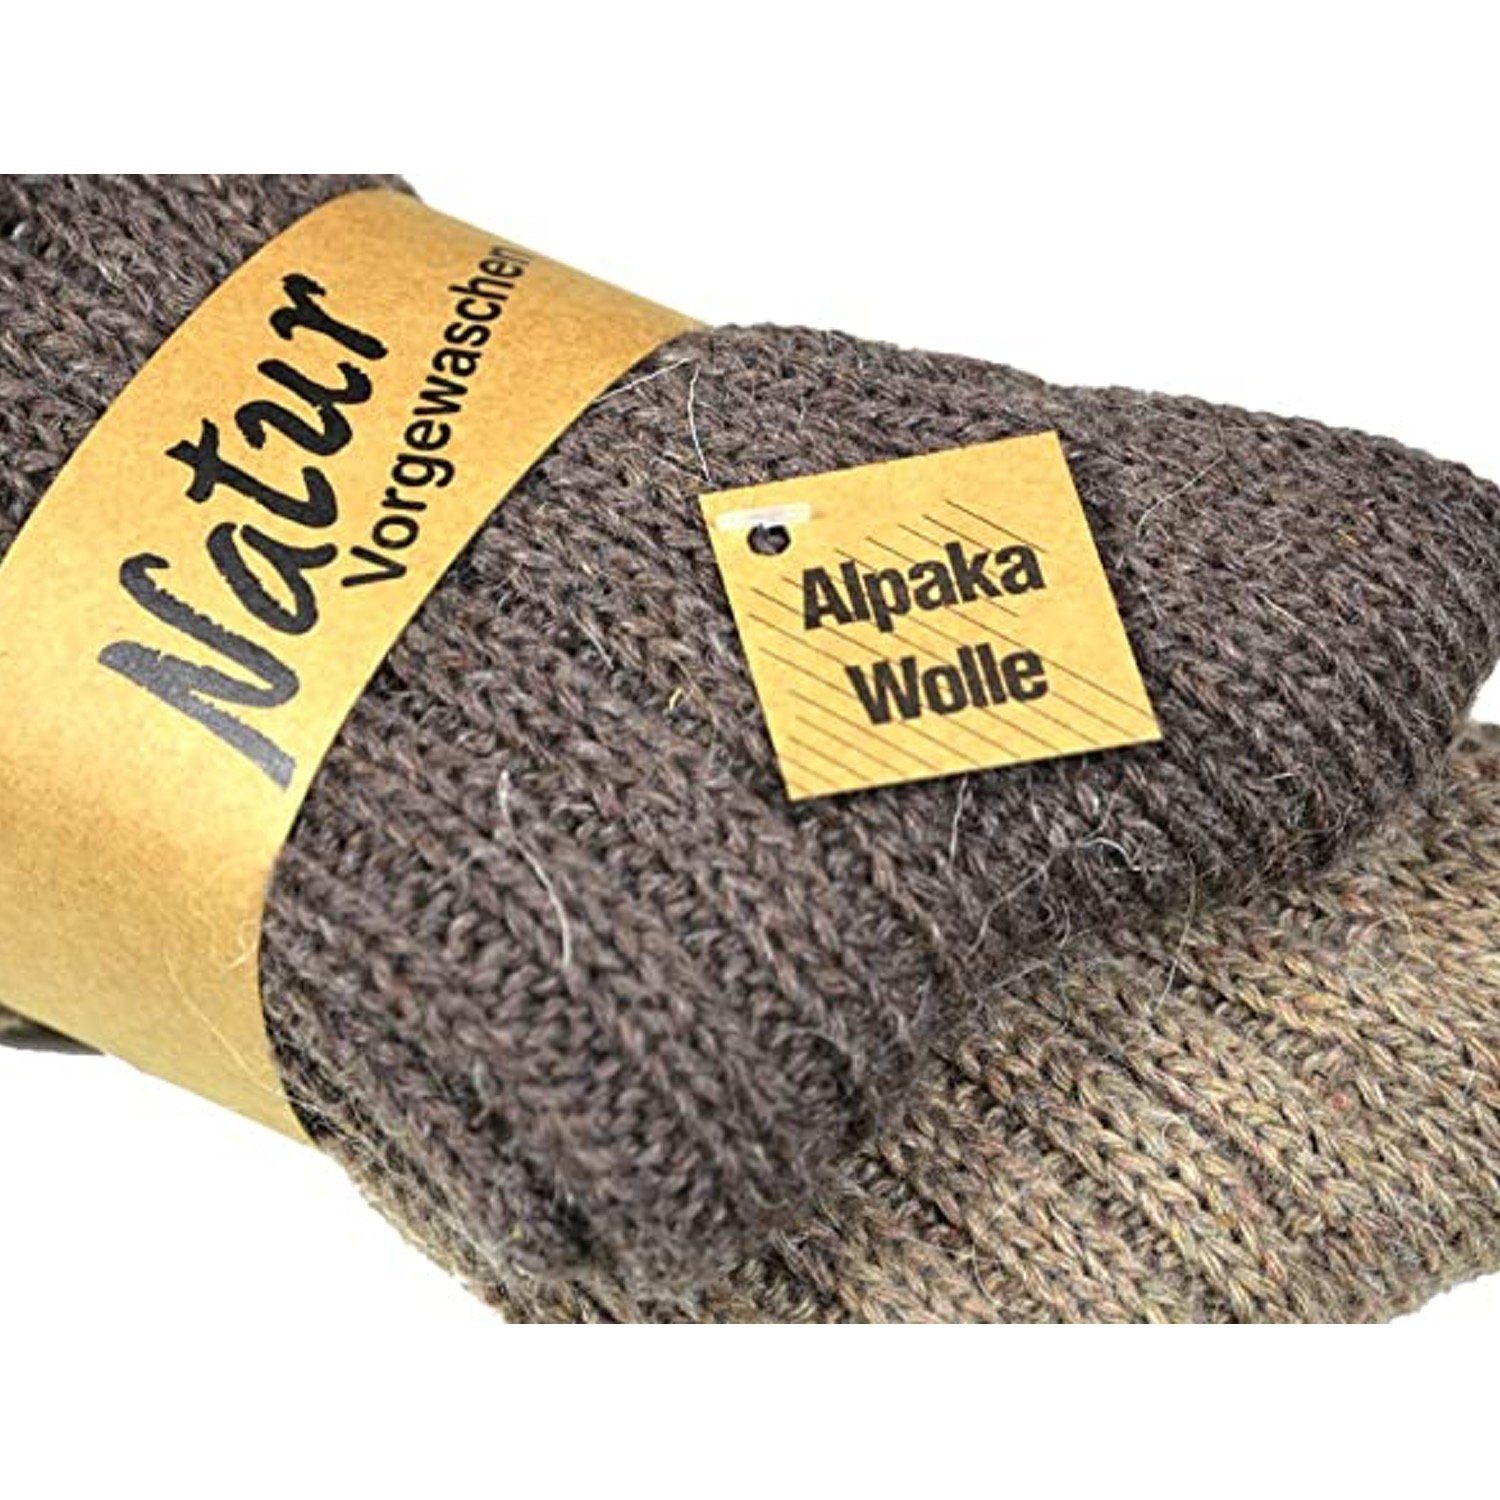 Cocain Stricksocken selbst Wollsocken underwear braun gestrickt wie Alpaka Socken Socken (2-Paar)